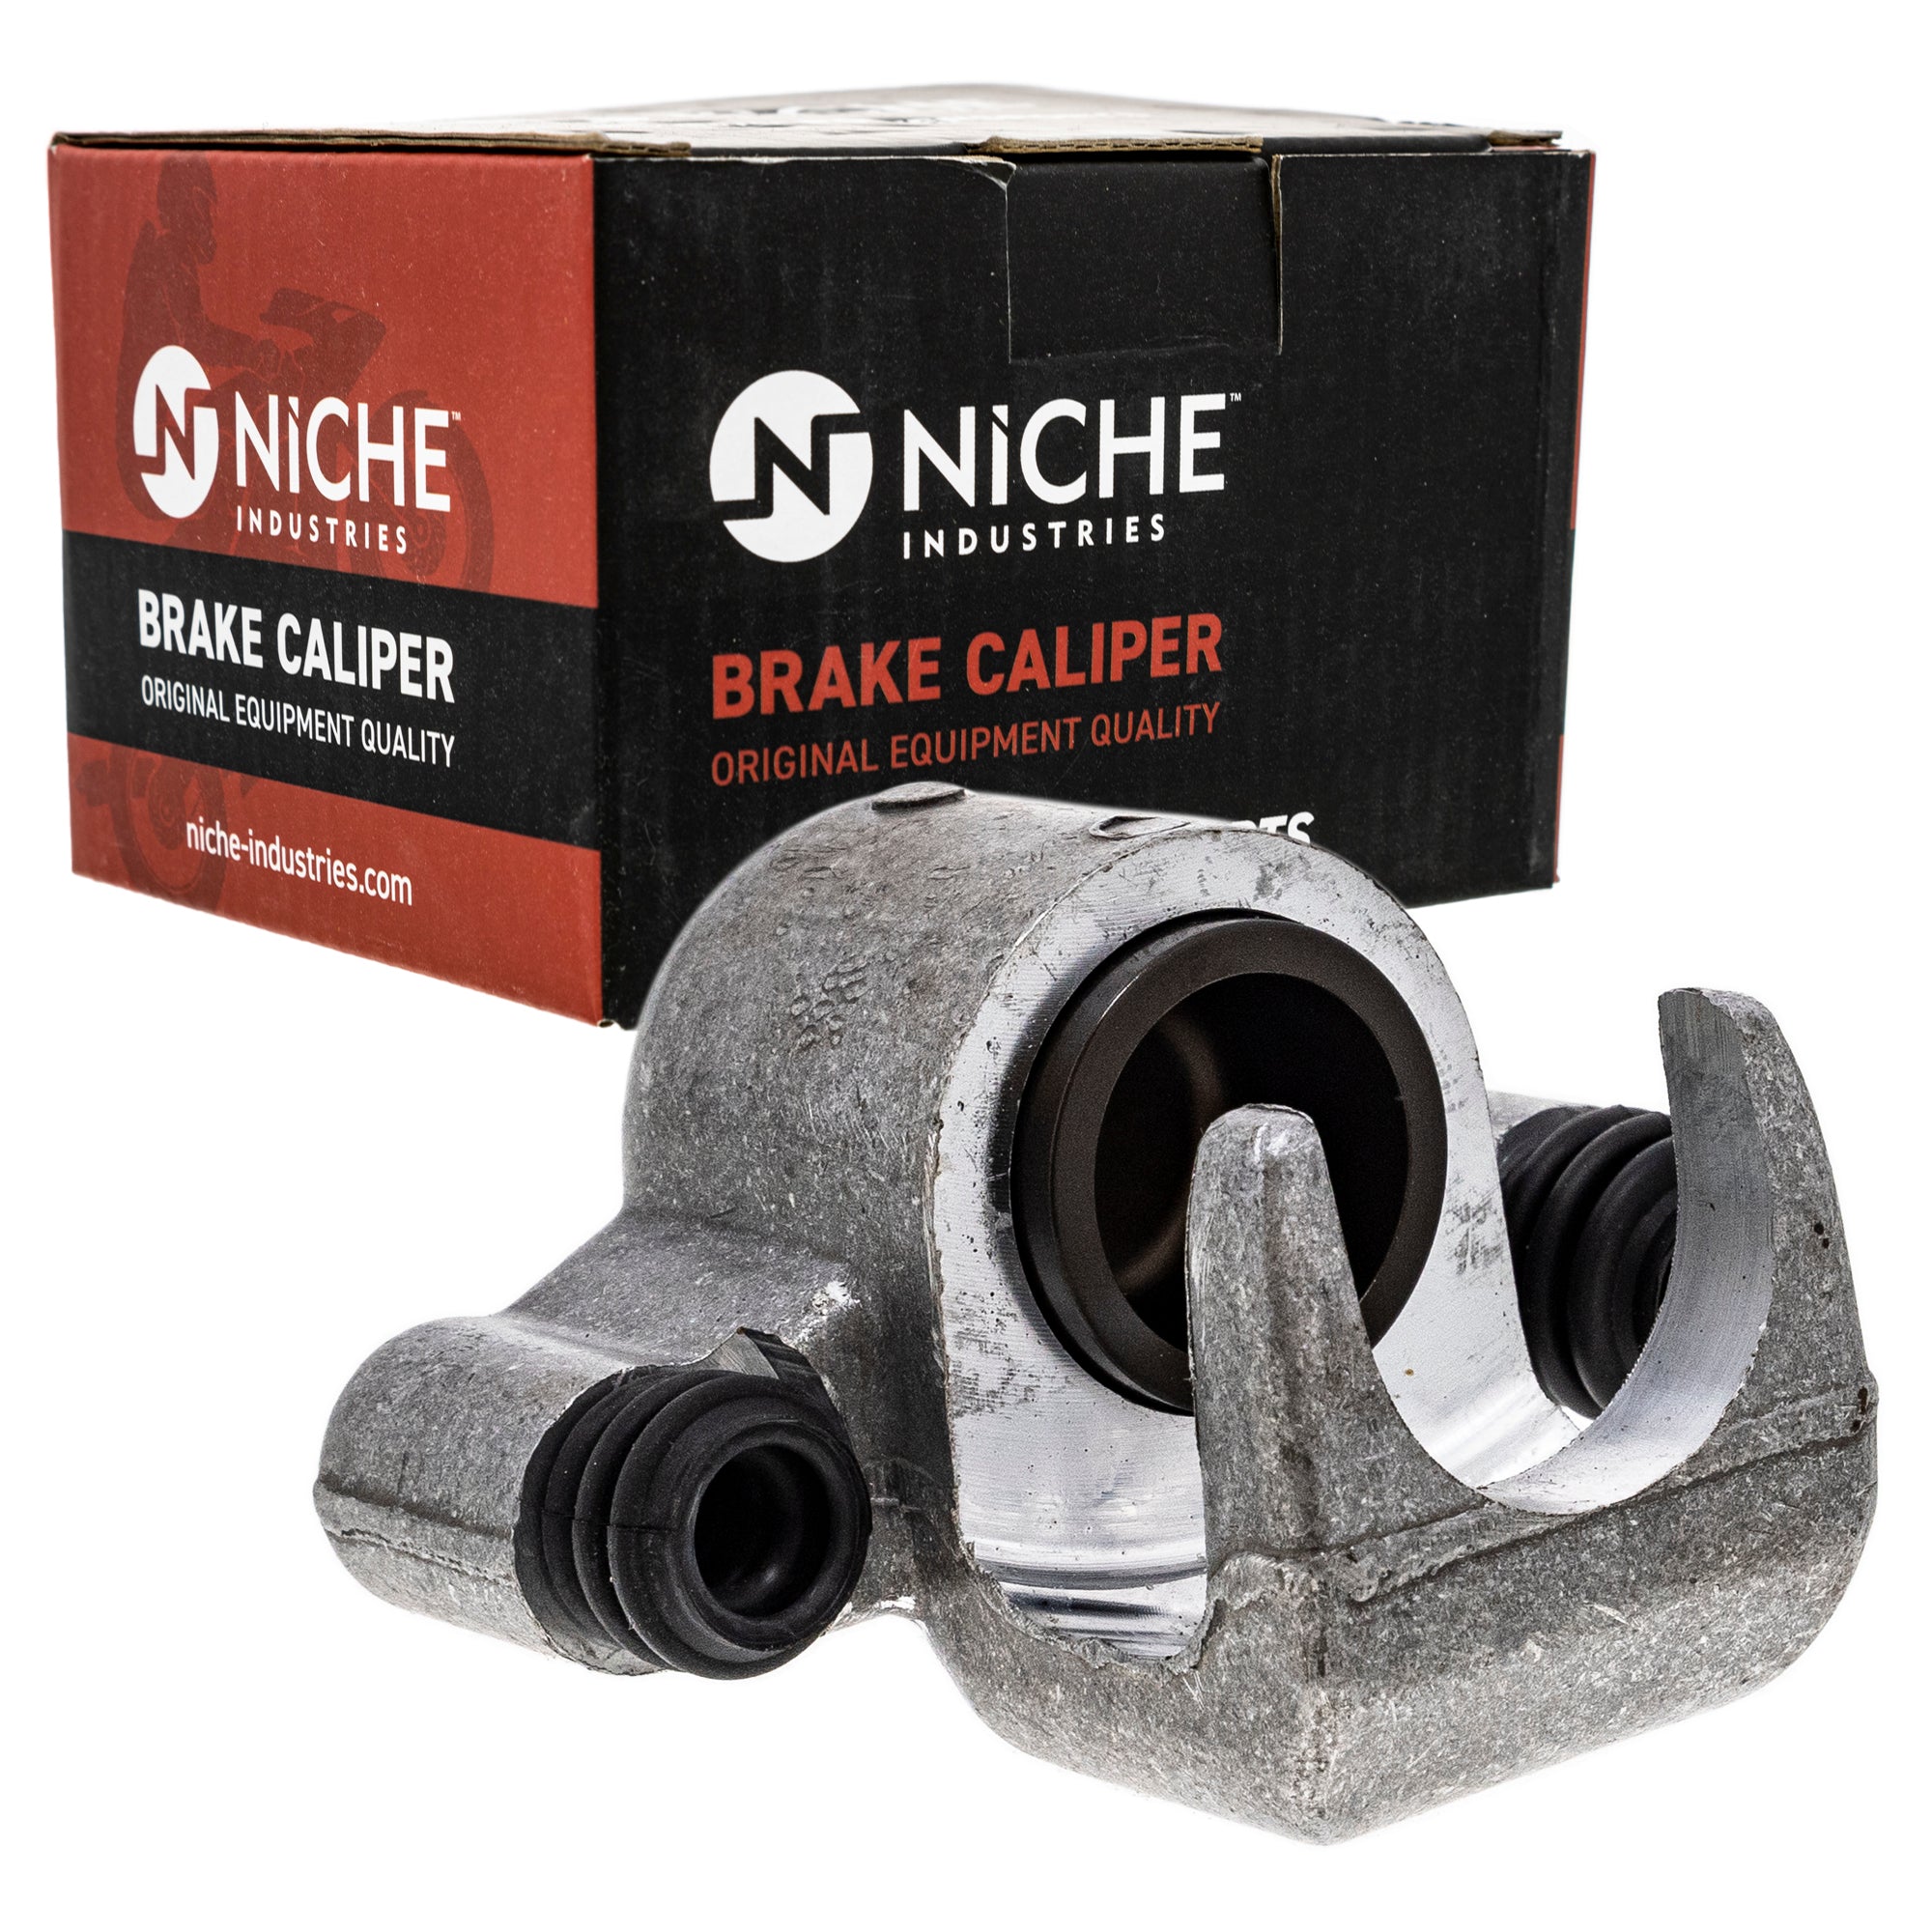 NICHE Brake Caliper & Pads Kit